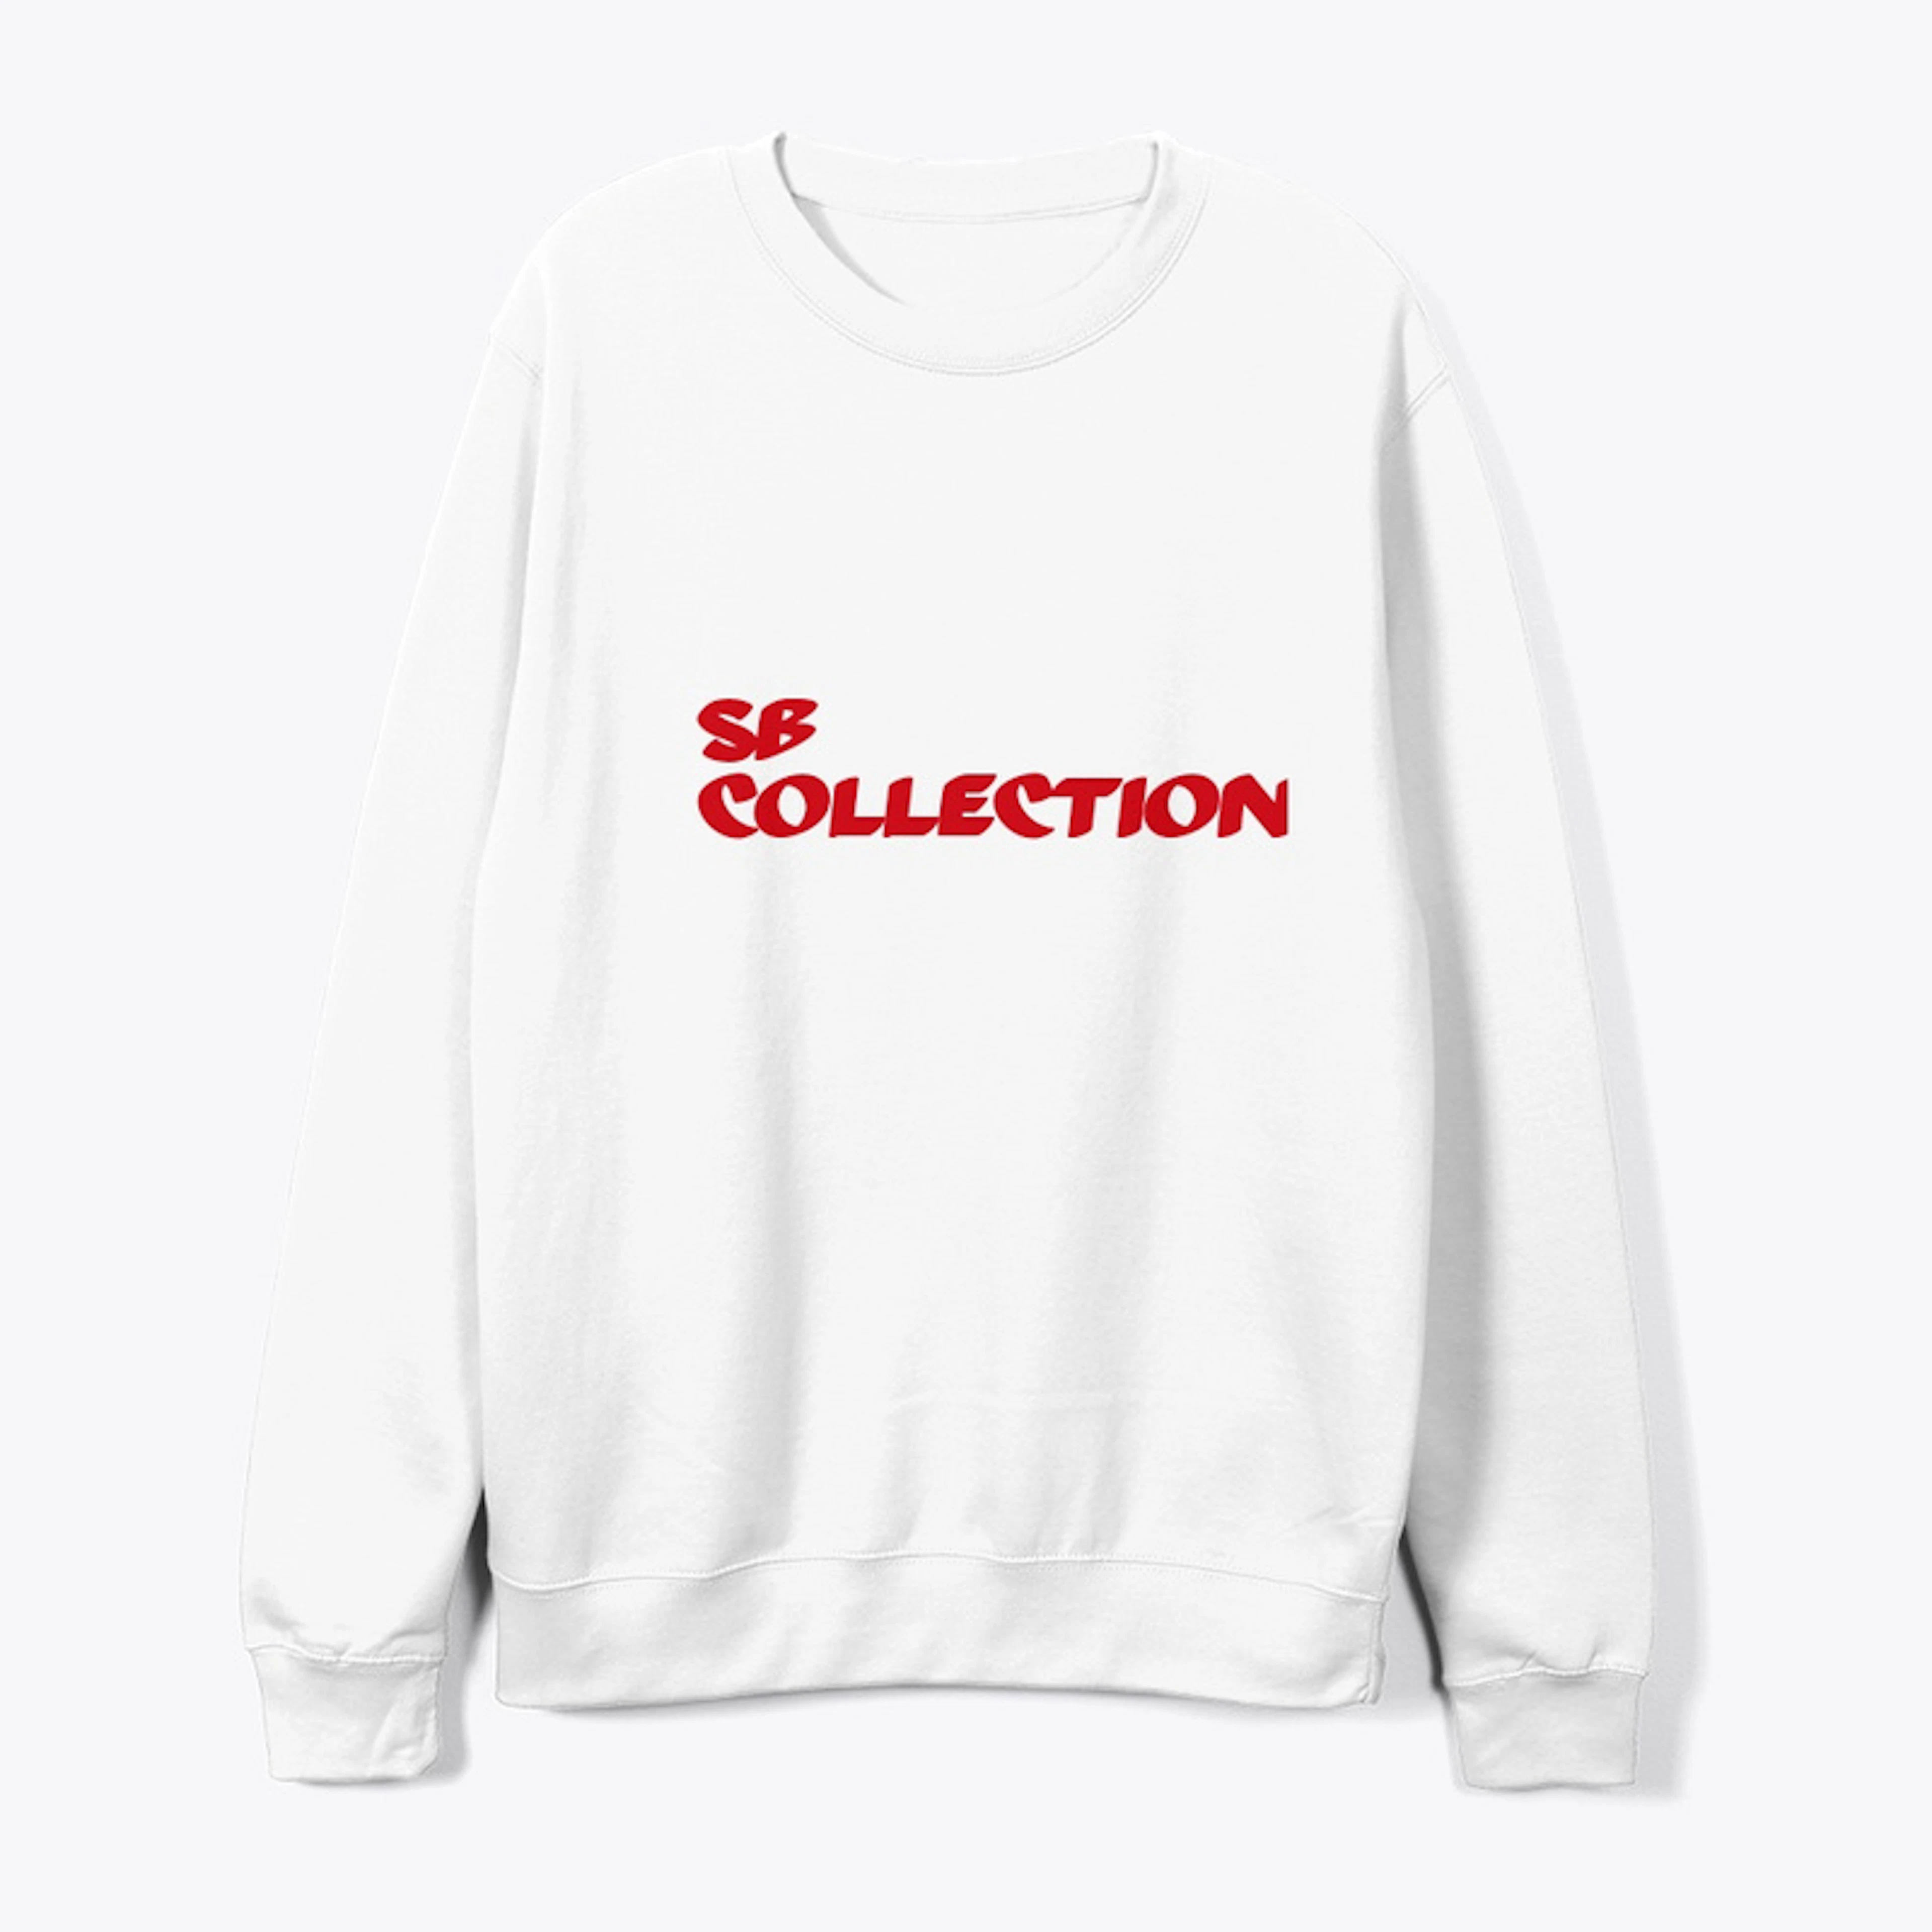 Sb collection 